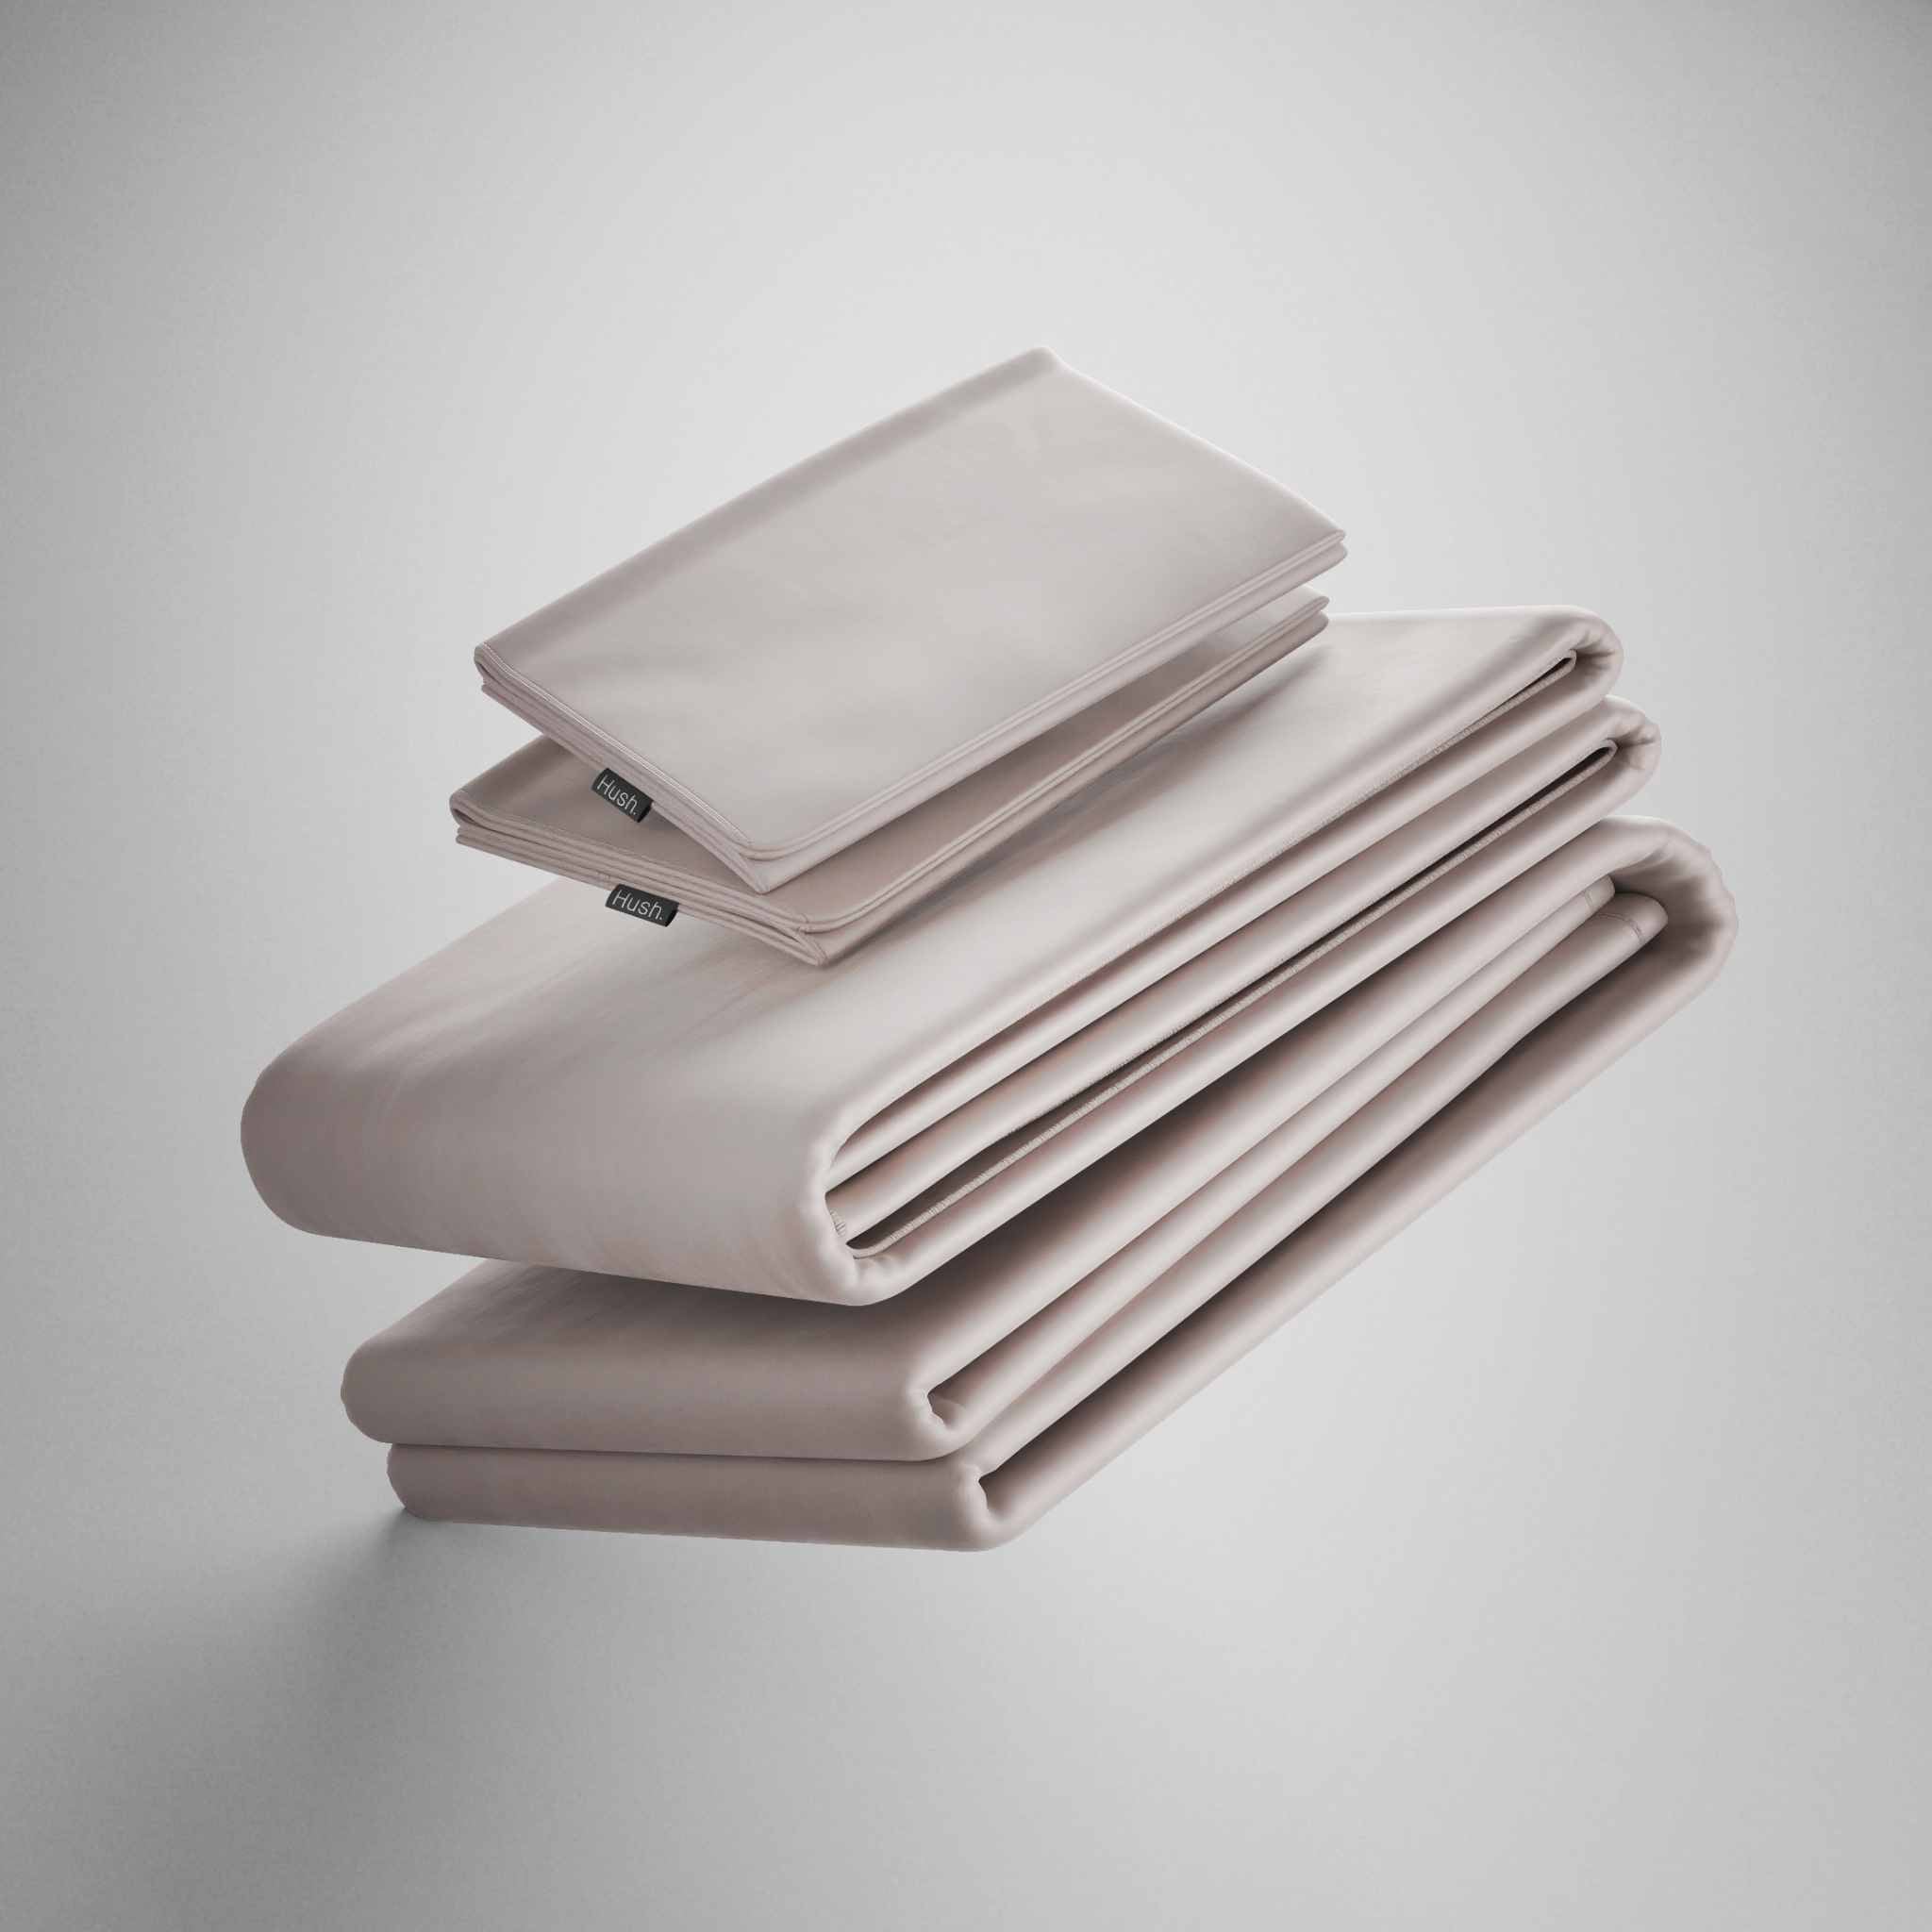 NC-1479 Breathable soft rayon cotton fabric